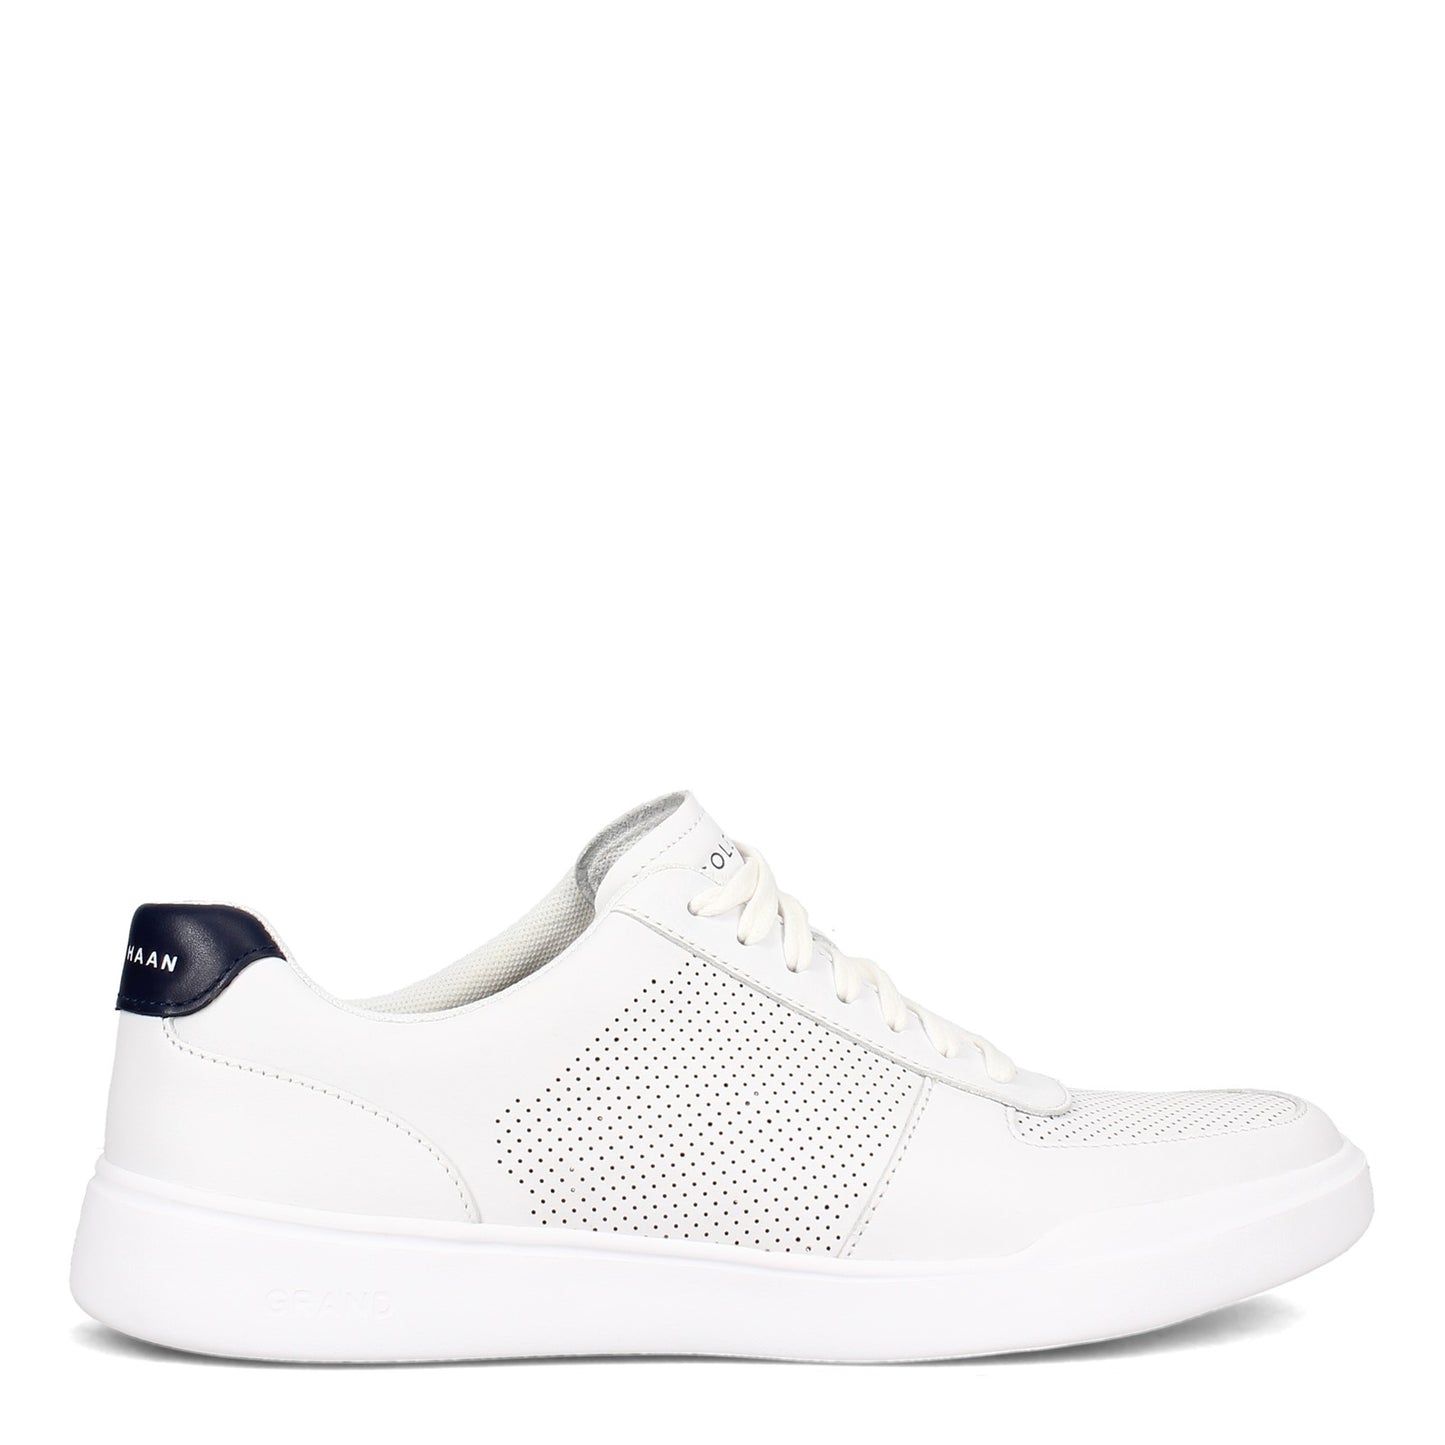 Peltz Shoes  Men's Cole Haan Grand Crosscourt Modern Perf Sneaker WHITE NAVY C33987